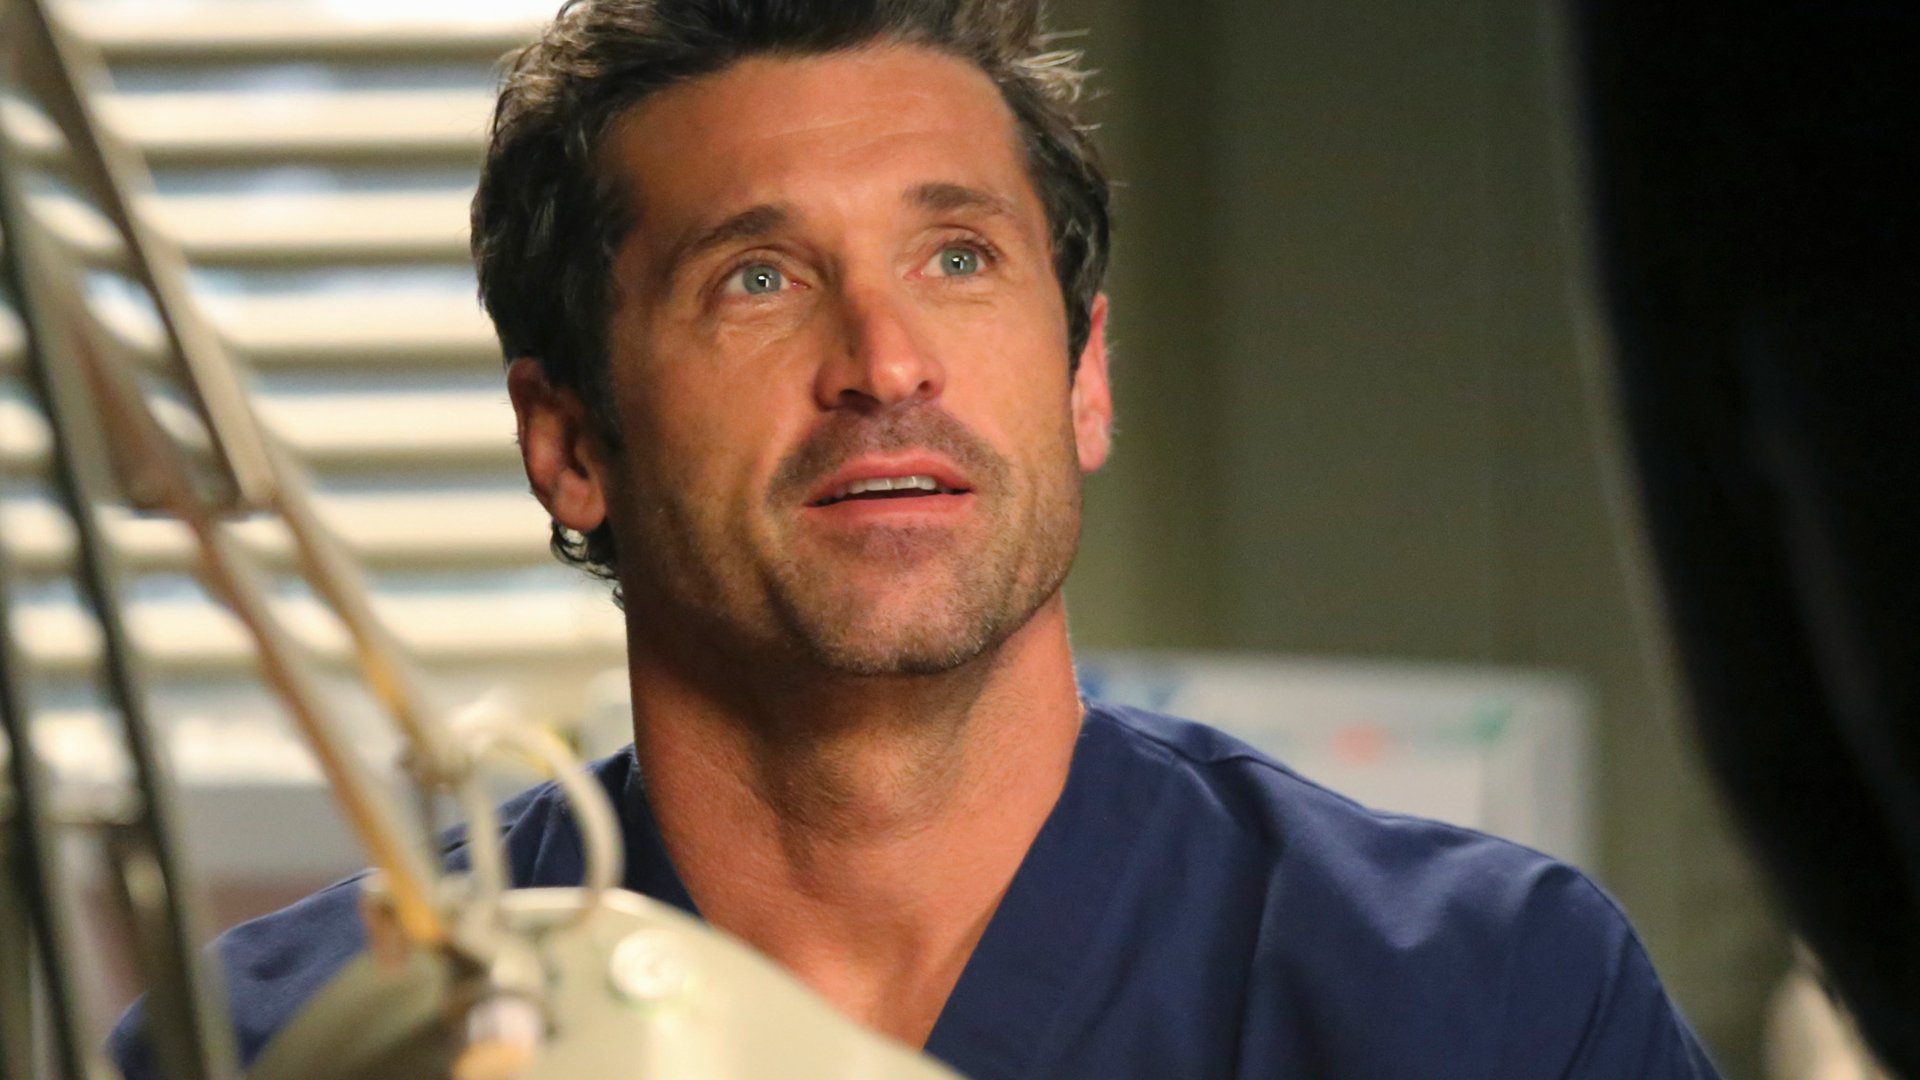 Patrick Dempsey as Derek Shepherd in scrubs on 'Grey's Anatomy' Season 10